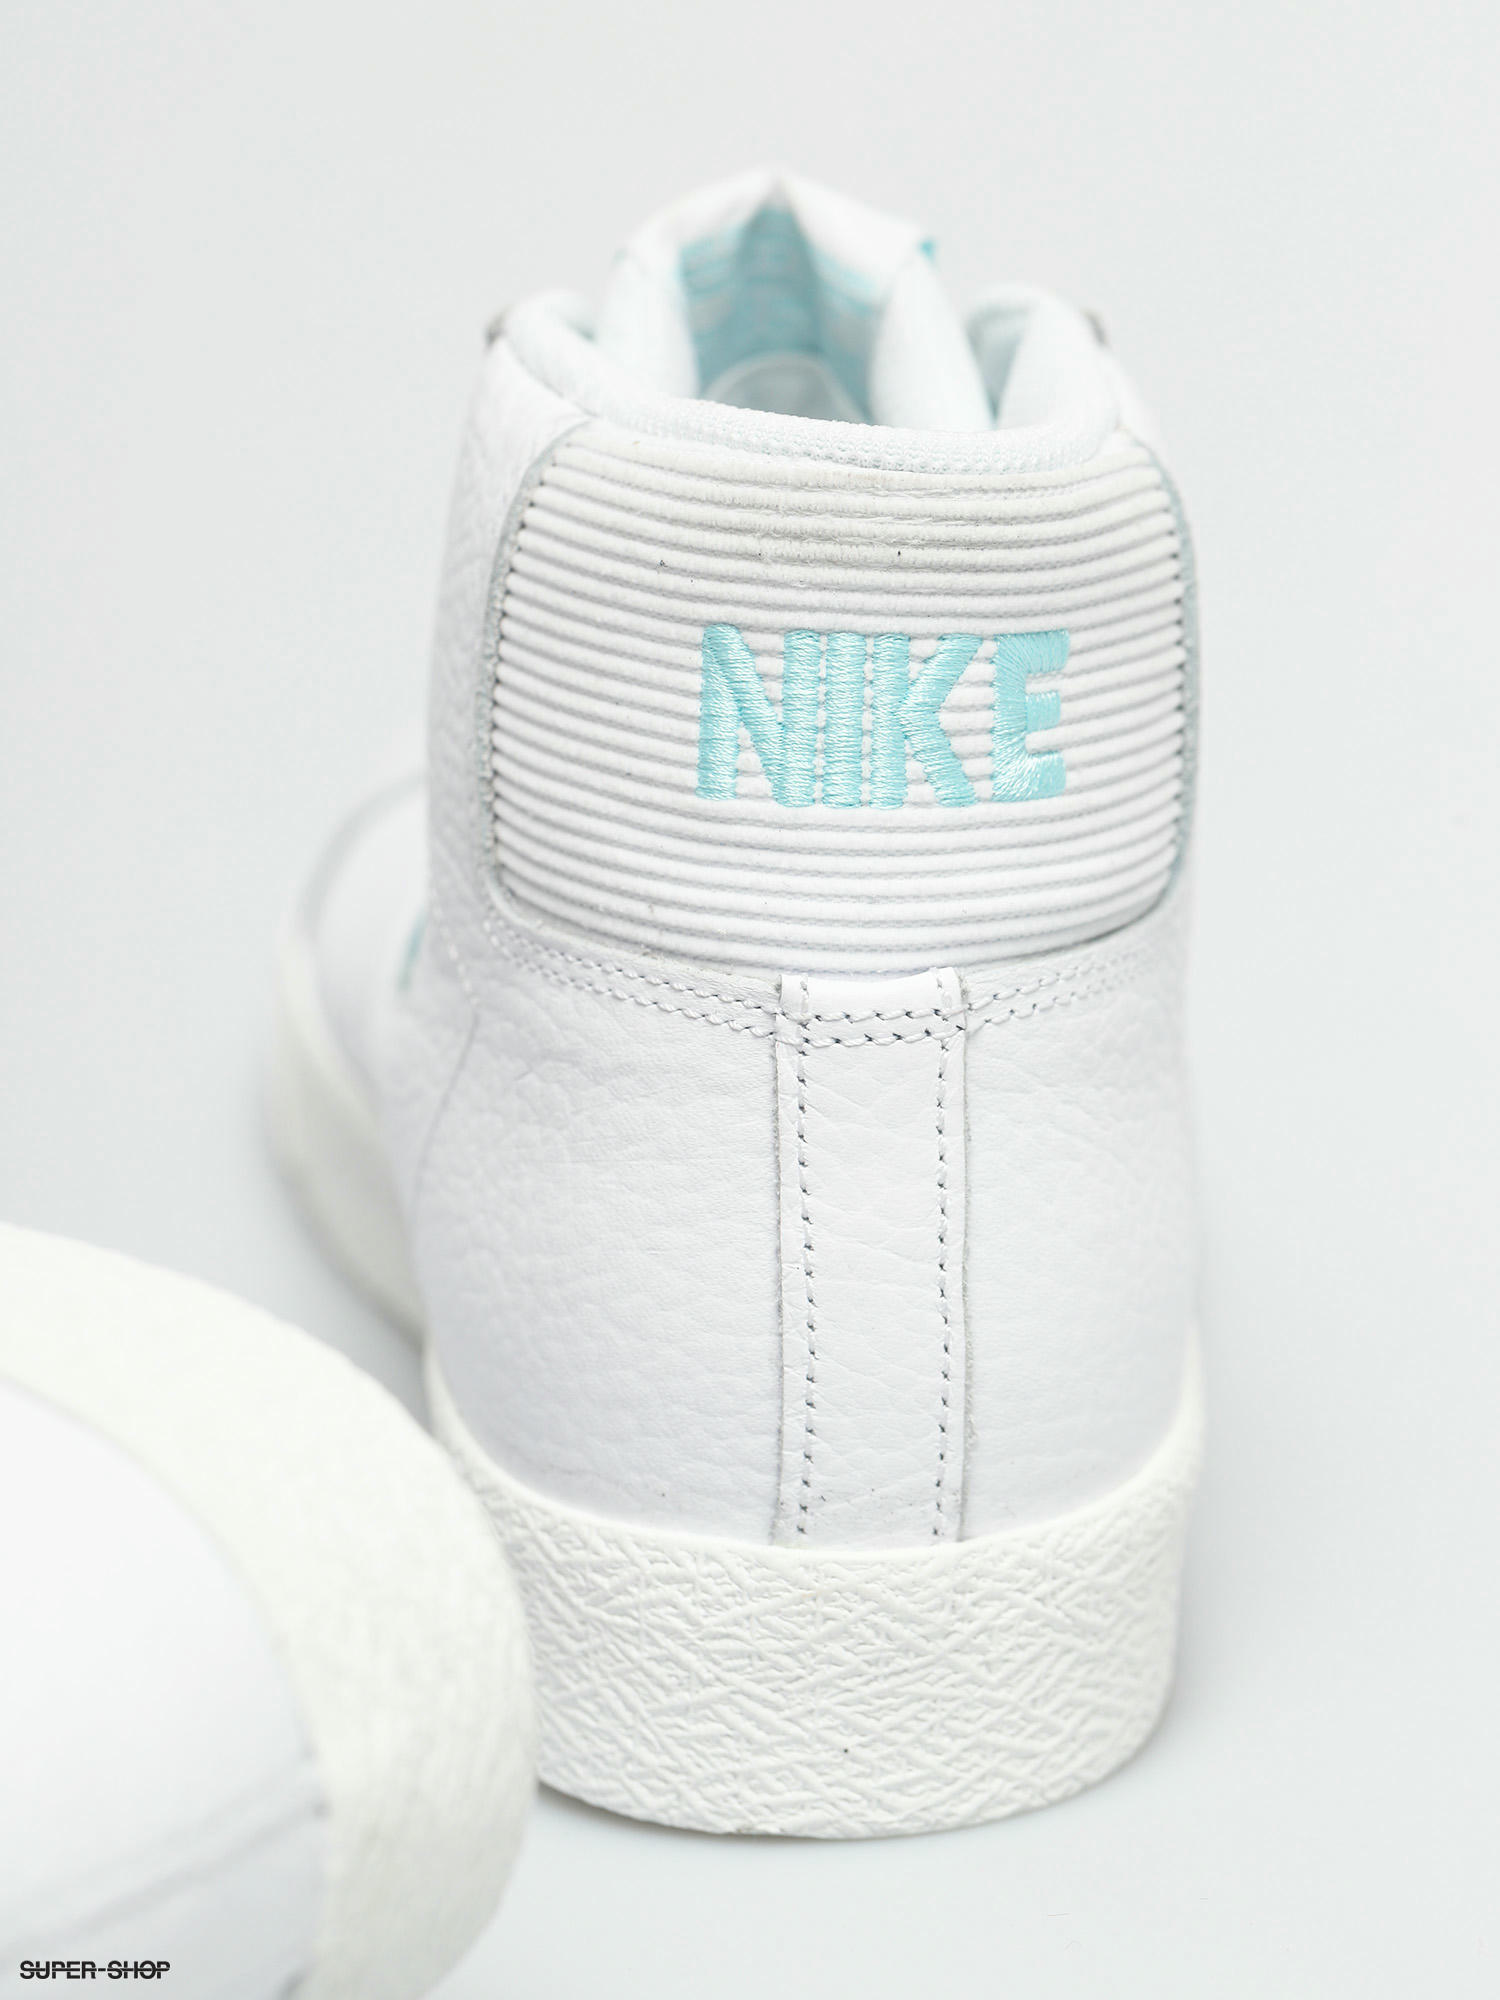 Nike Sb Zoom Blazer Mid Premium Shoes White Glacier Ice White Summit White